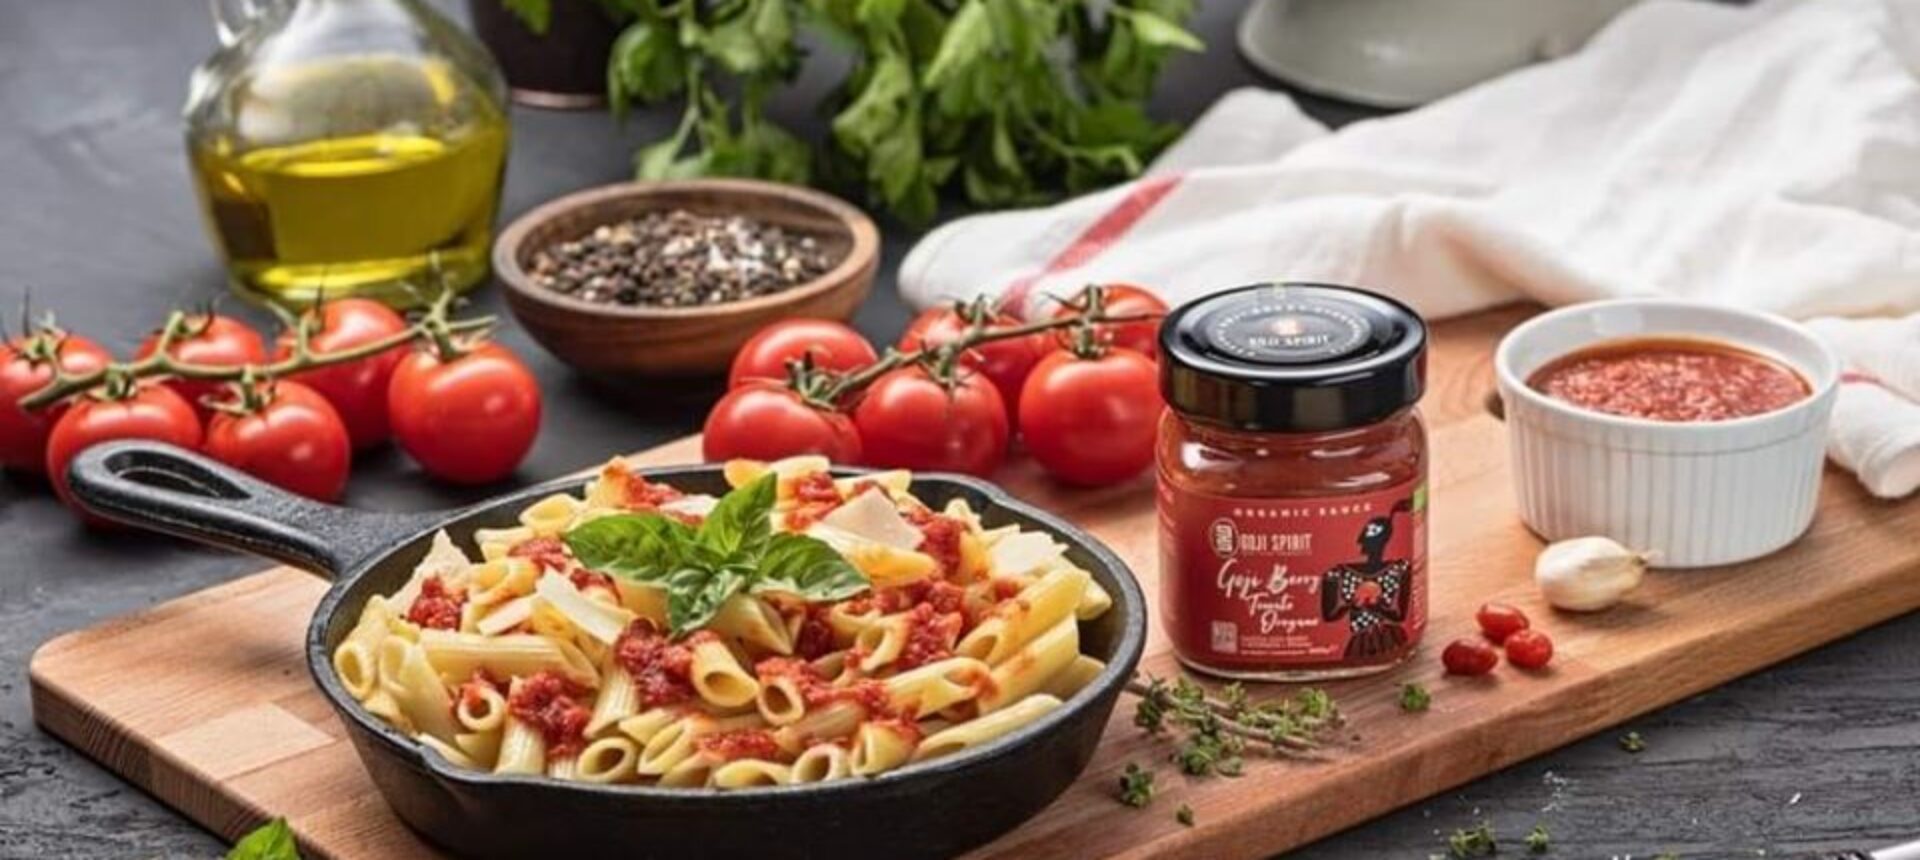 Pasta with Tomato Sauce-Goji berry-Oregano and Parmesan